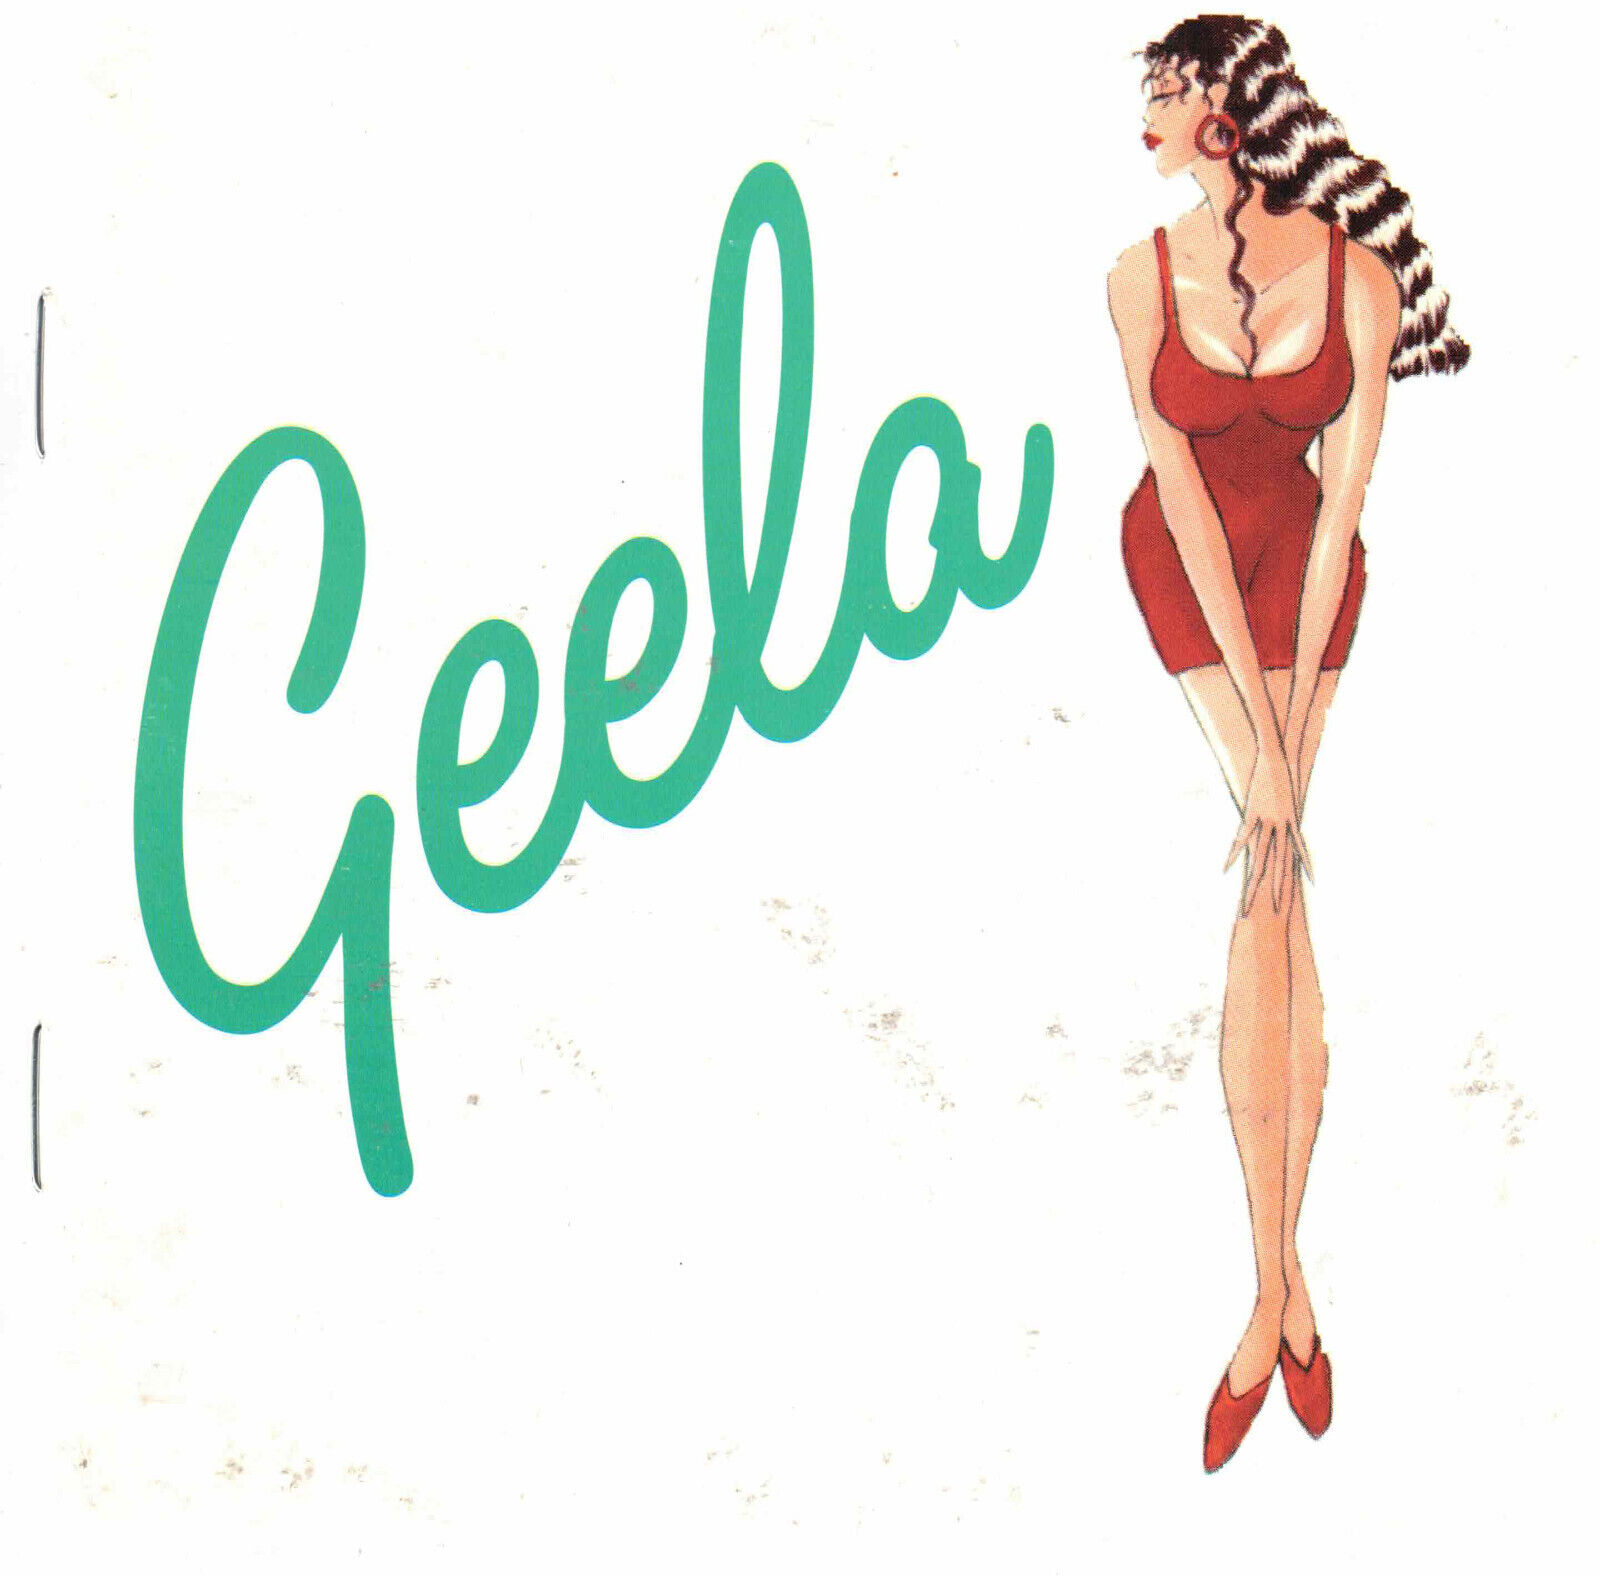 Geela by Geela (CD, 1994 Global Vision) Pop Dance/Post Disco/Out of Print